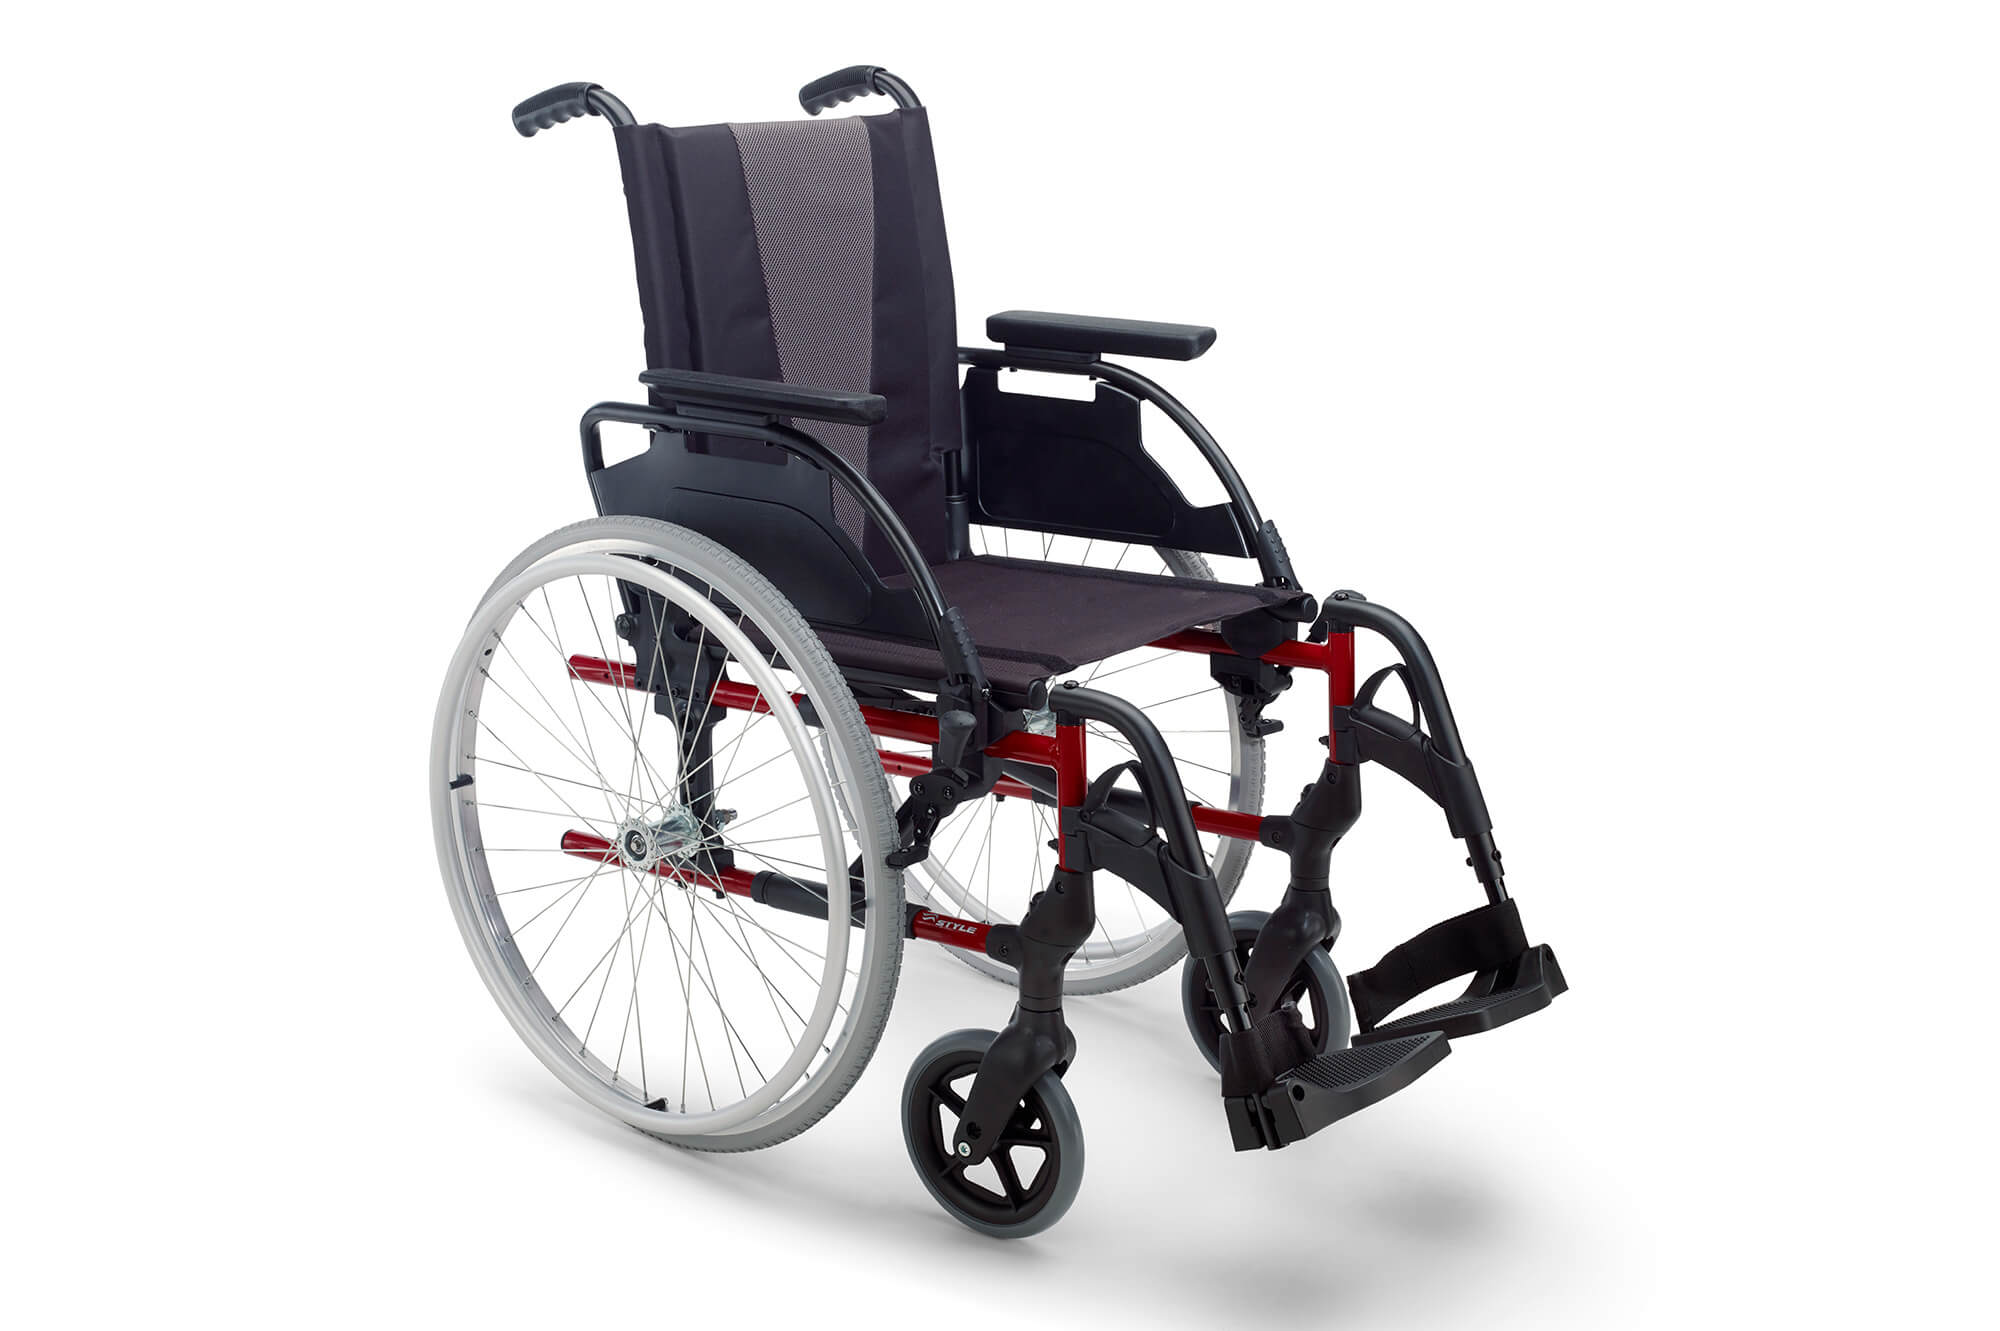 https://www.sunrisemedical.eu/getmedia/b387bf3e-691d-4d45-883f-3eef45e13e35/gallery-style-standard-wheelchair-product-2022